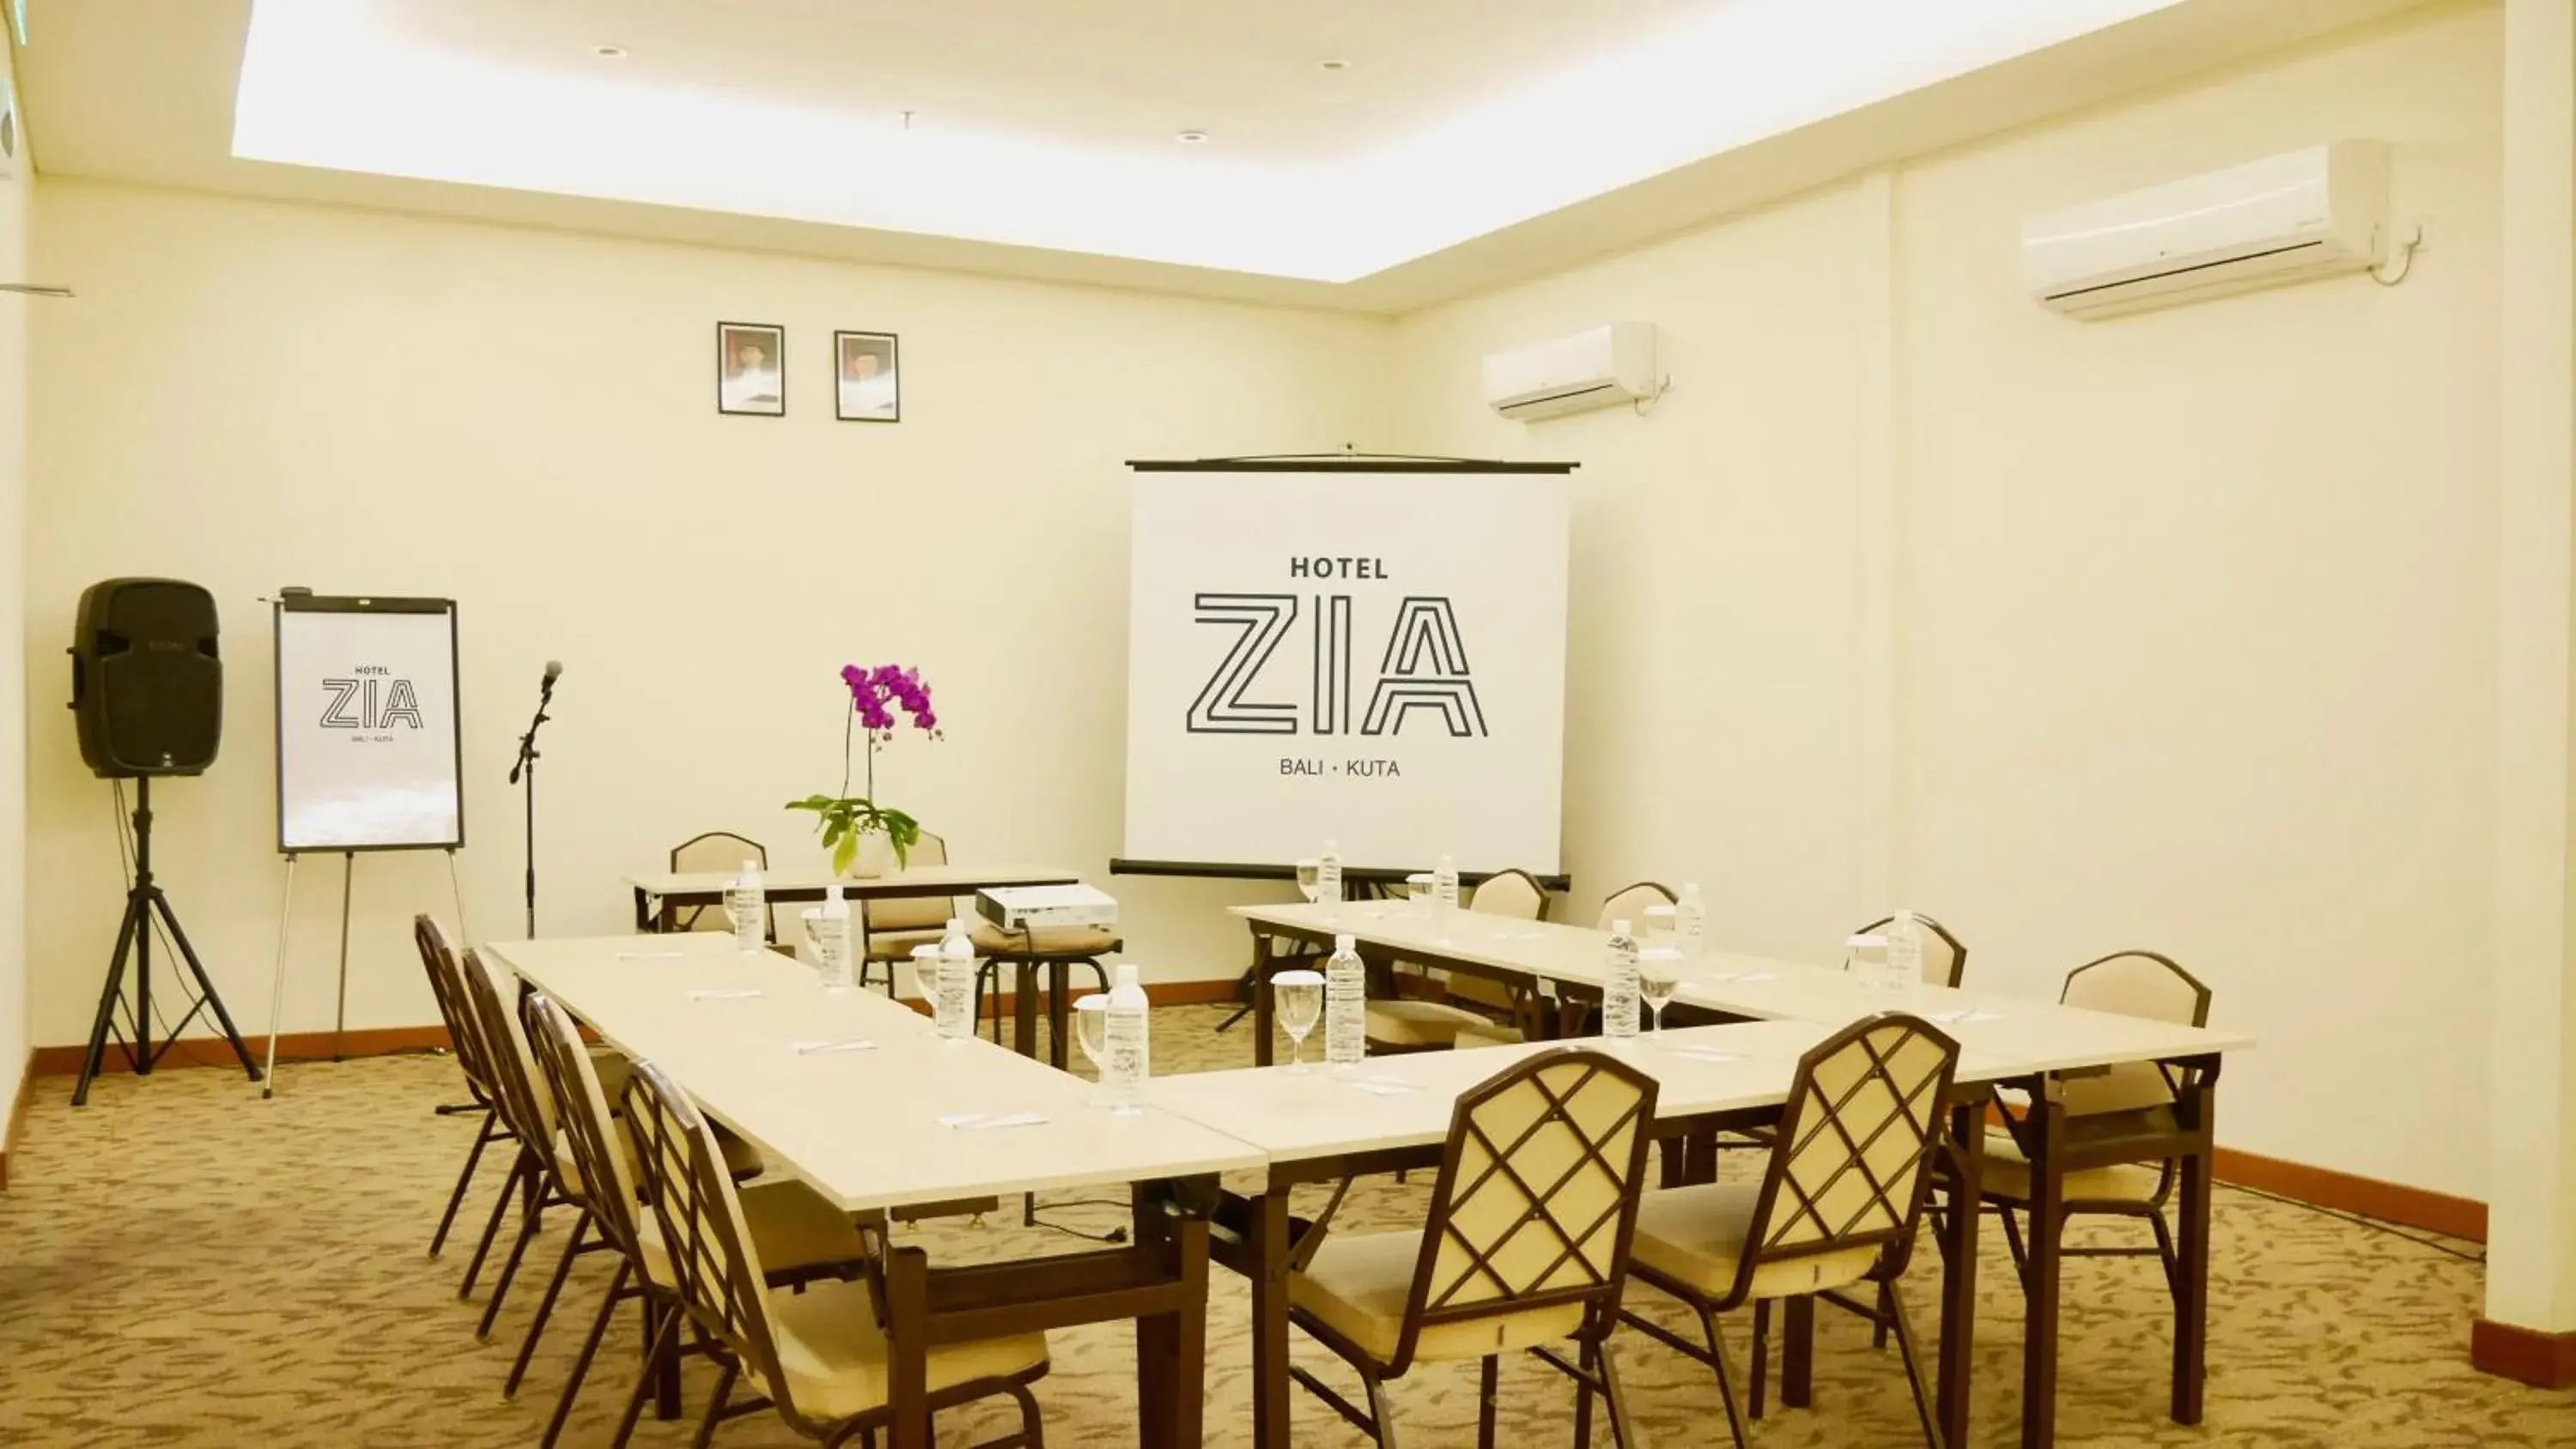 Meeting/conference room in Zia Hotel Kuta